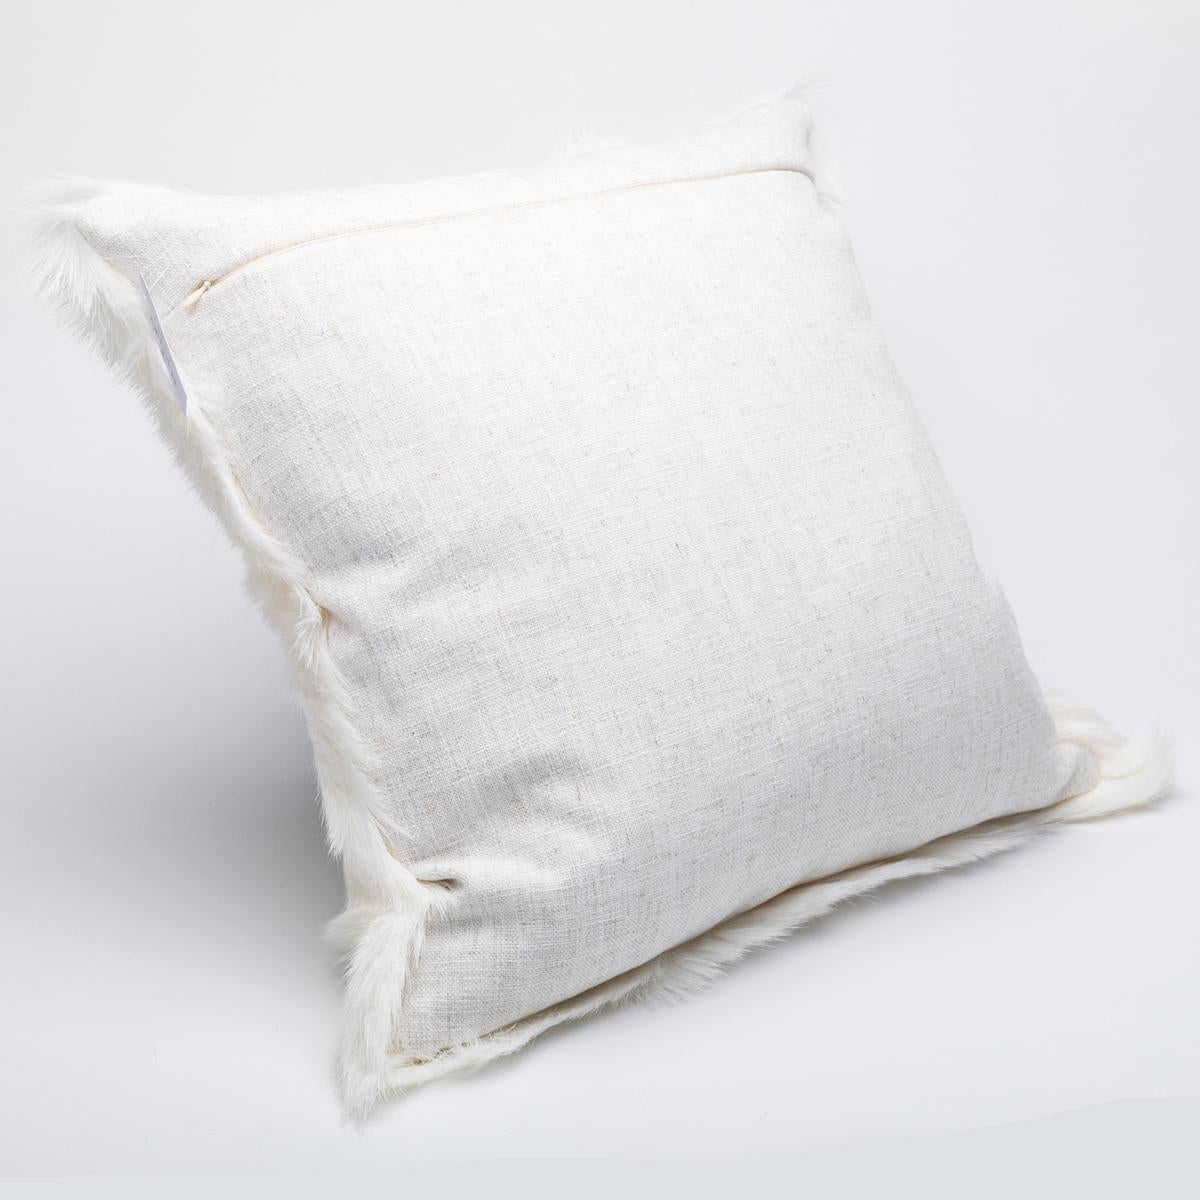 Australian Goat Hair Pillow Cushion, Natural White Customized For Sale